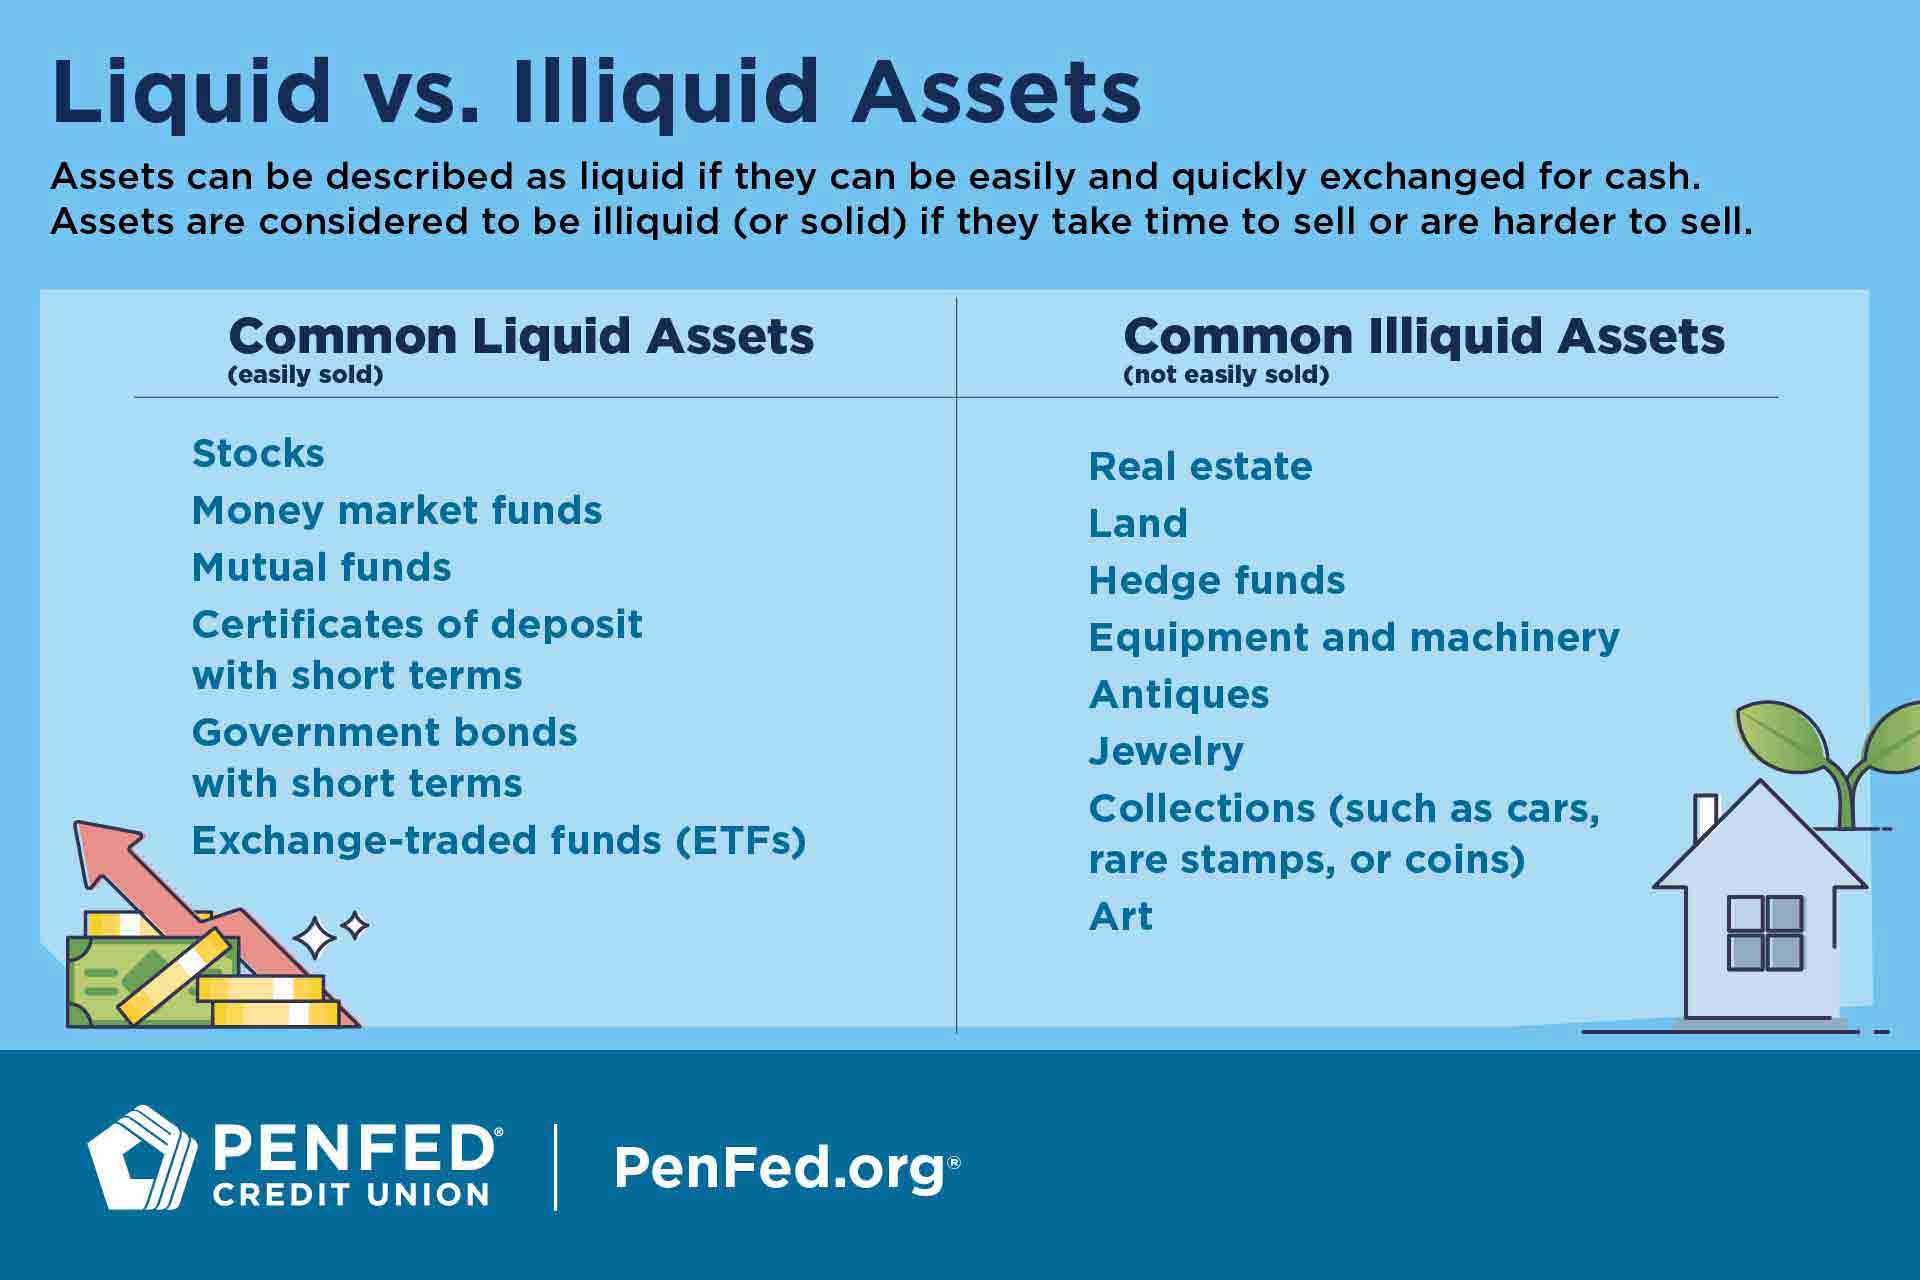 Table of differences between liquid vs illiquid assets